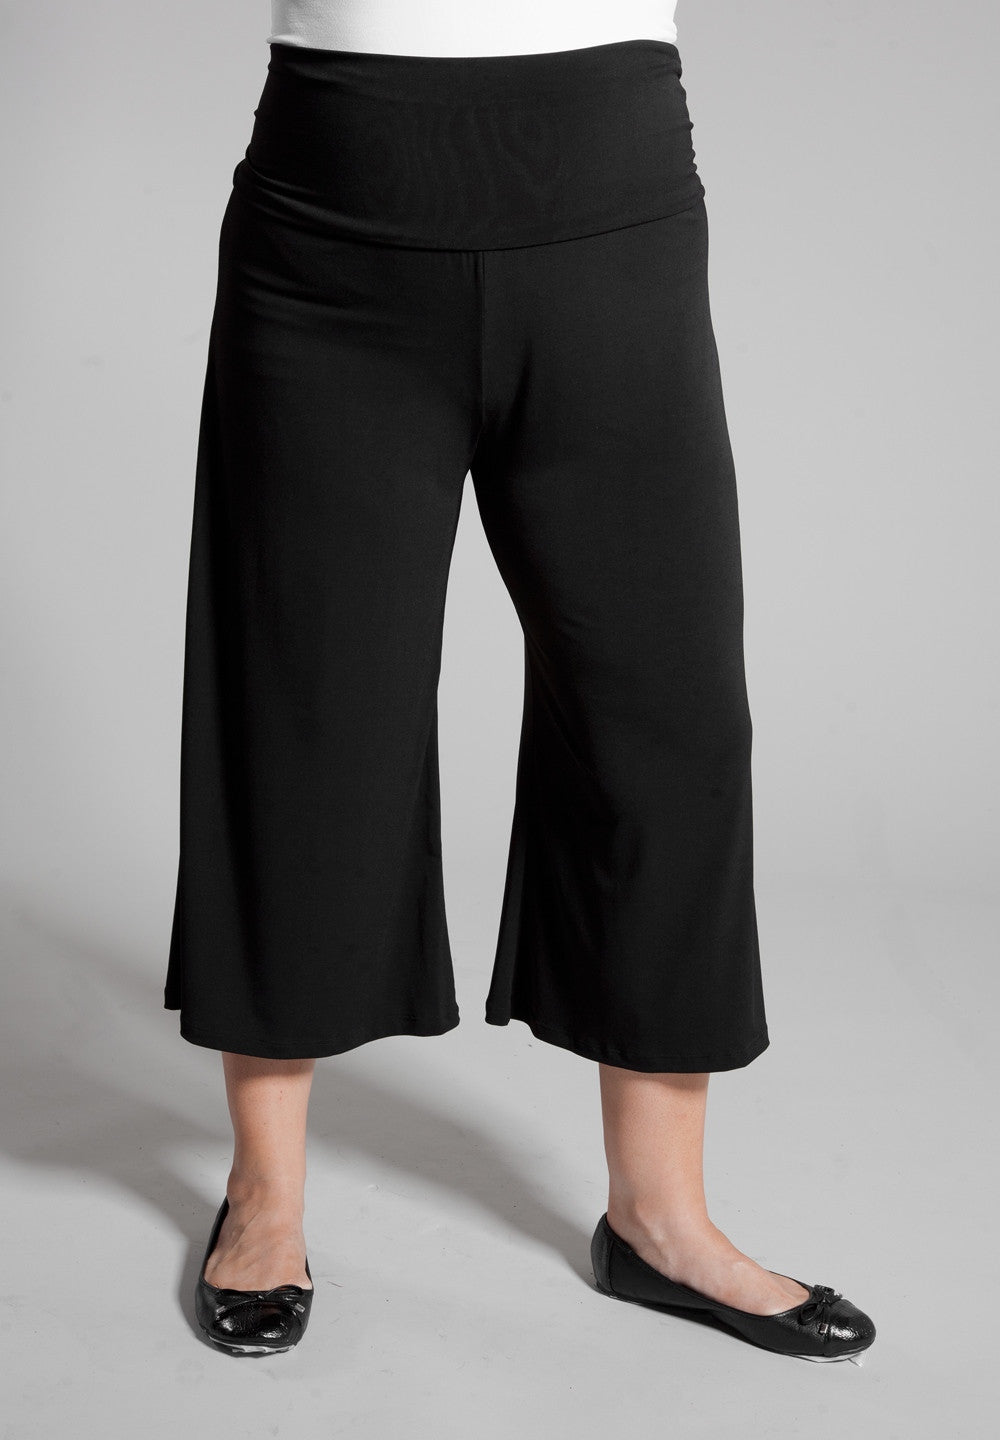 Super Comfy Plus Size Bottoms  Essential Gaucho Pants in Black